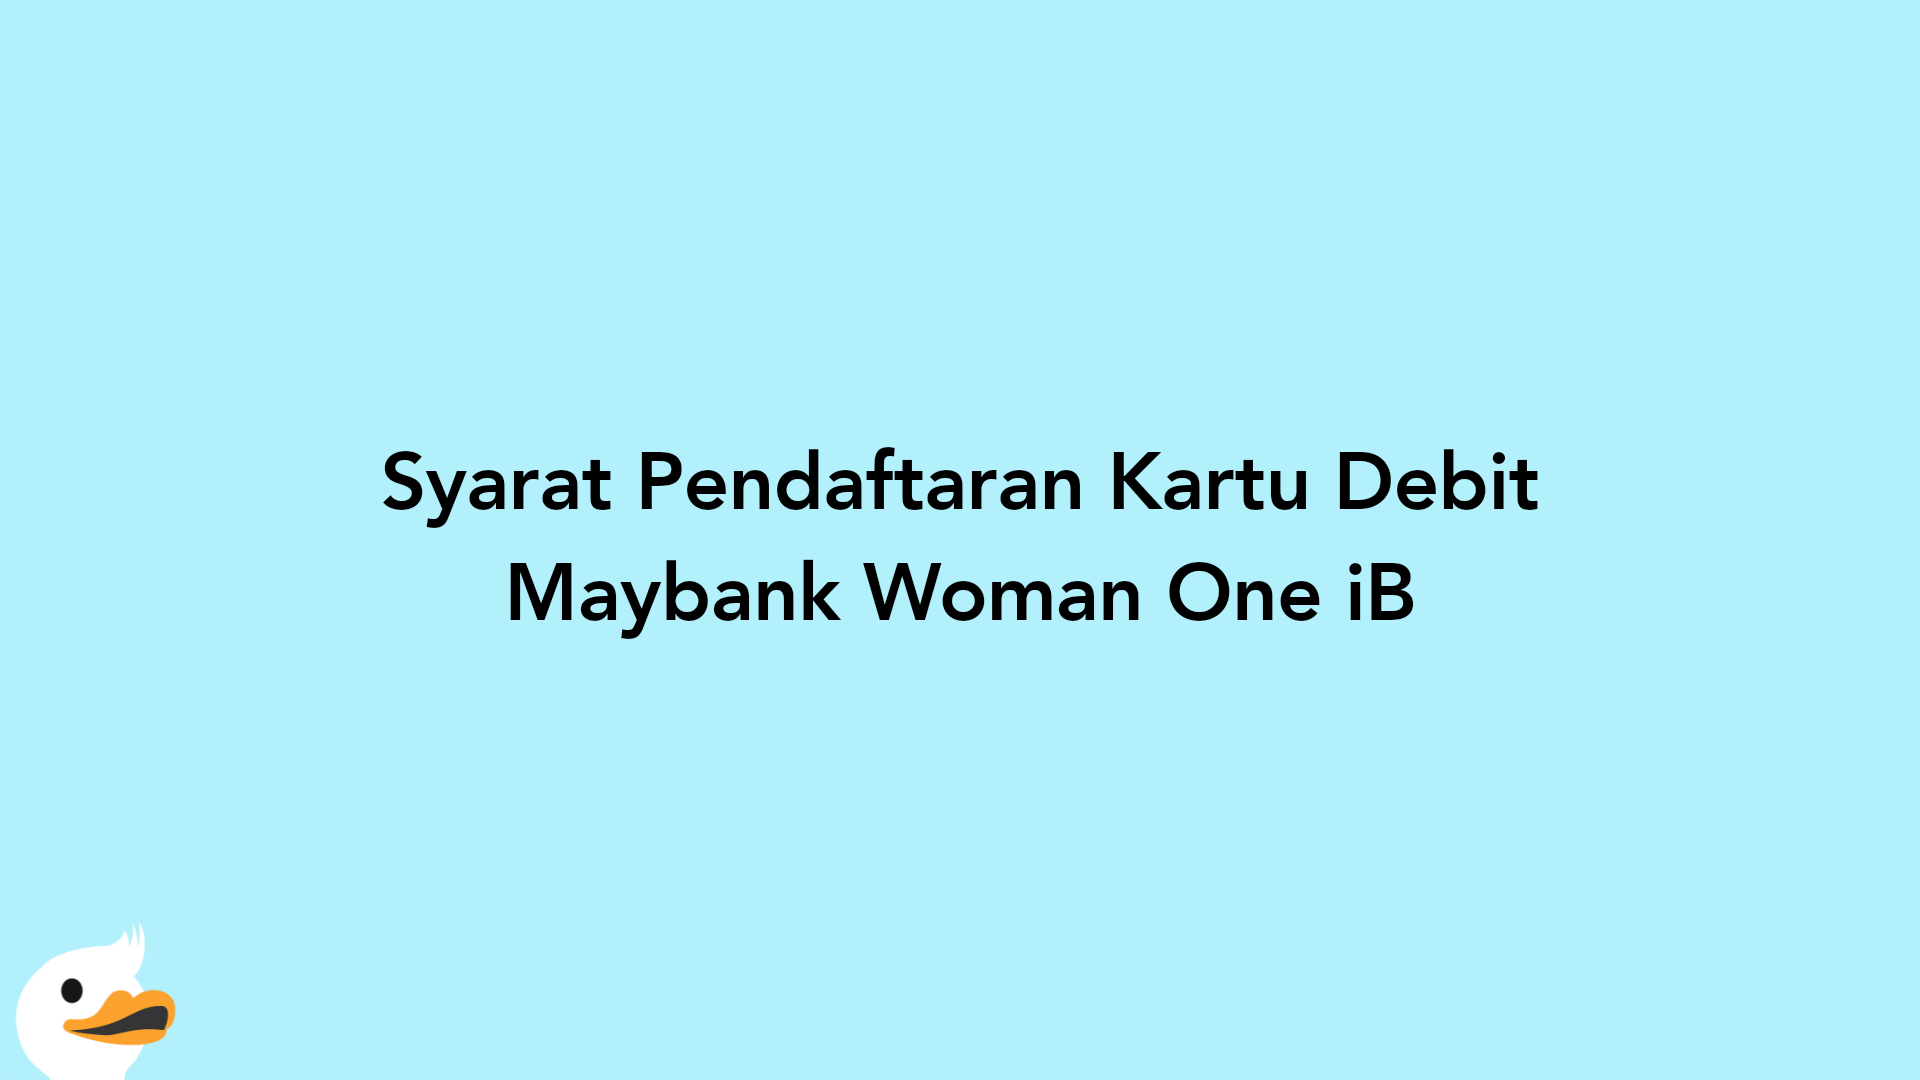 Syarat Pendaftaran Kartu Debit Maybank Woman One iB